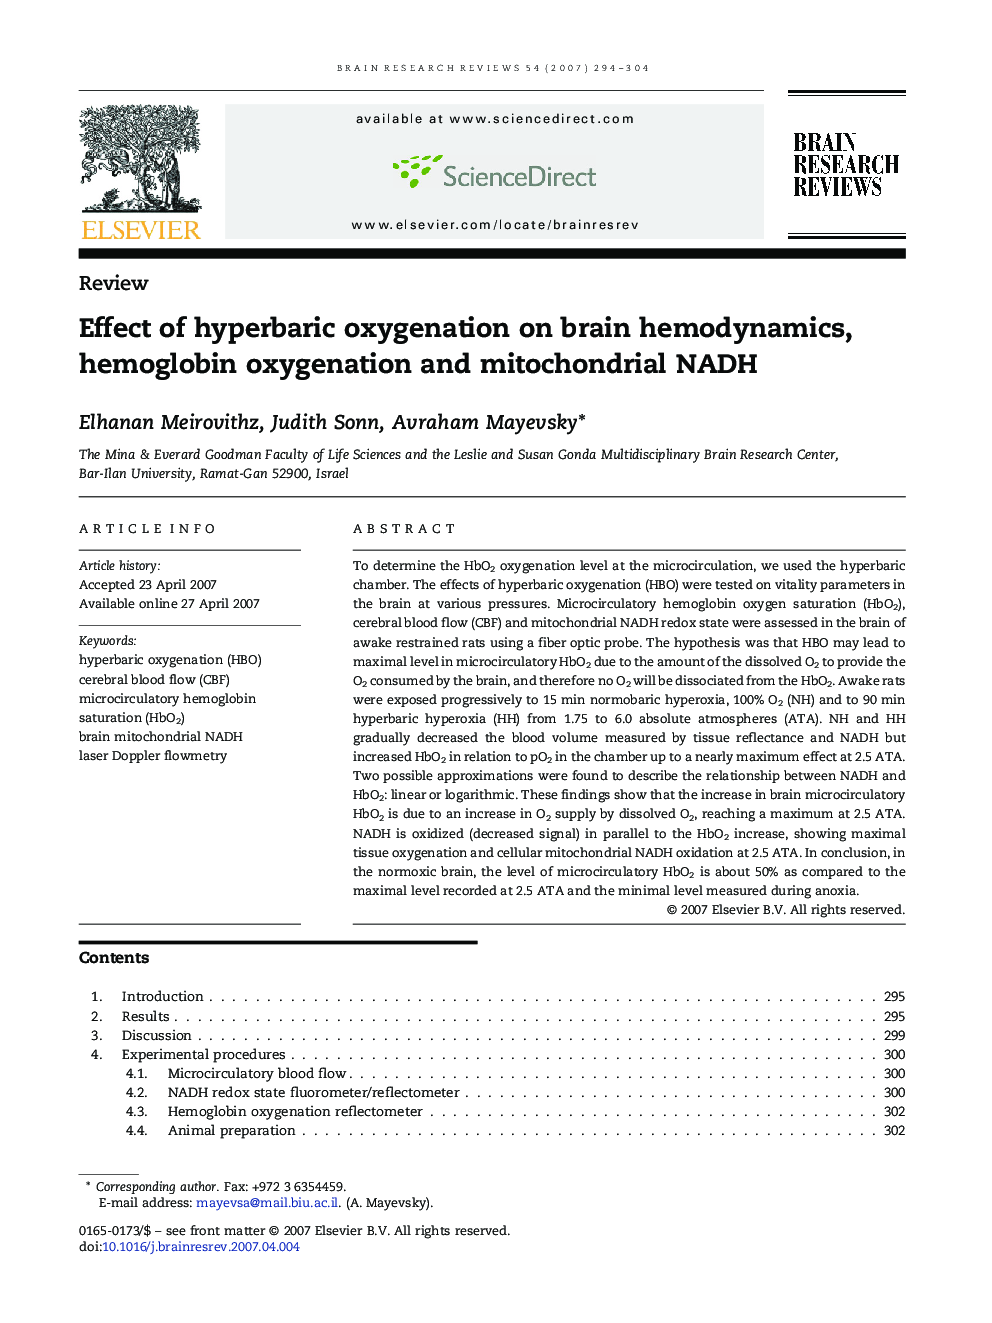 Effect of hyperbaric oxygenation on brain hemodynamics, hemoglobin oxygenation and mitochondrial NADH